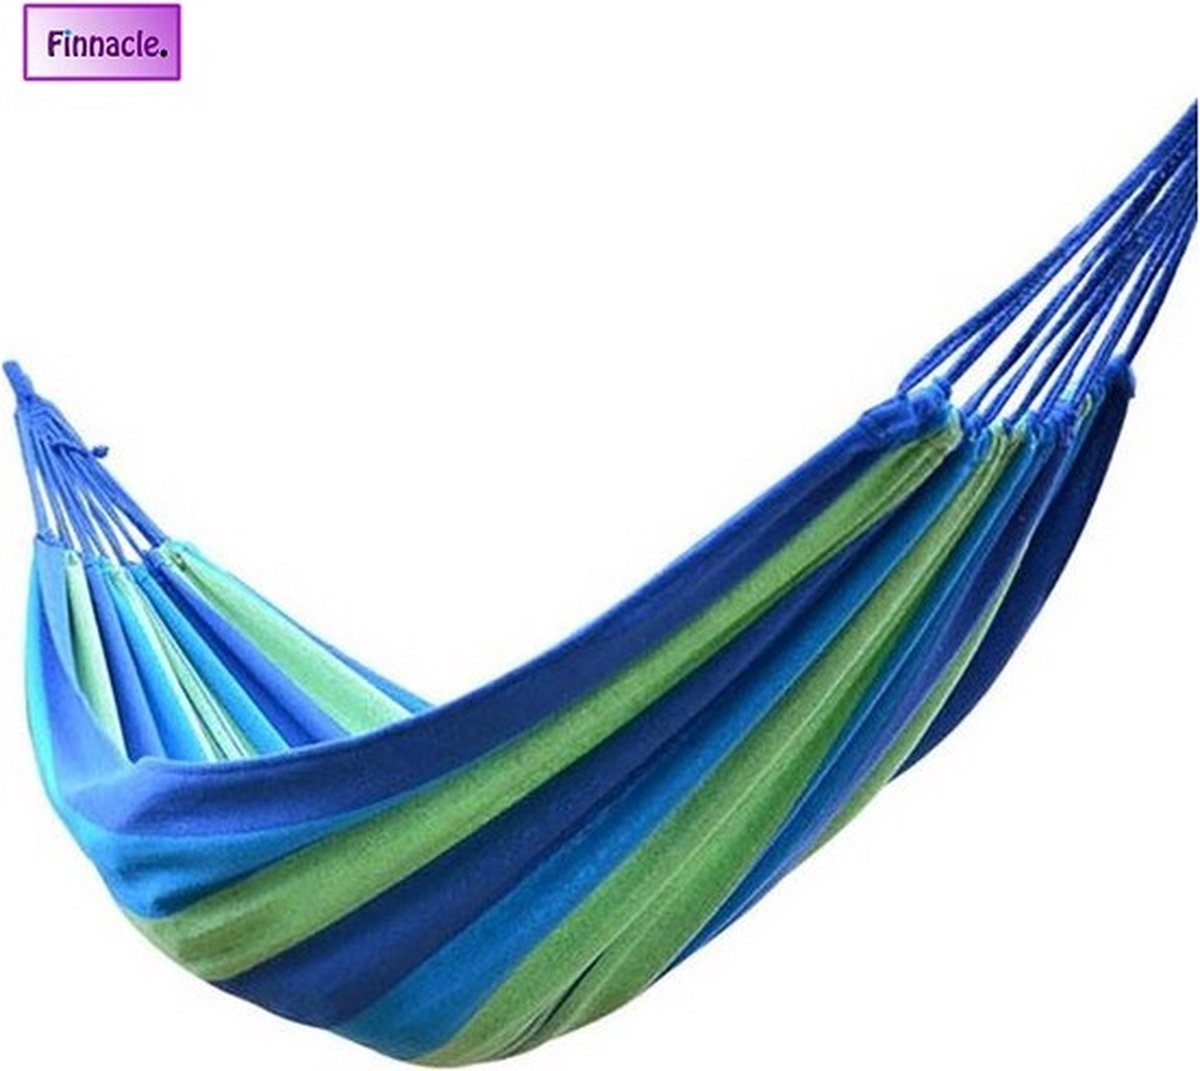 Finnacle- Hangmat - 180/100cm - Blauw/groen - Tuinaccessoire - Grote hangmat - Tuinmeubel